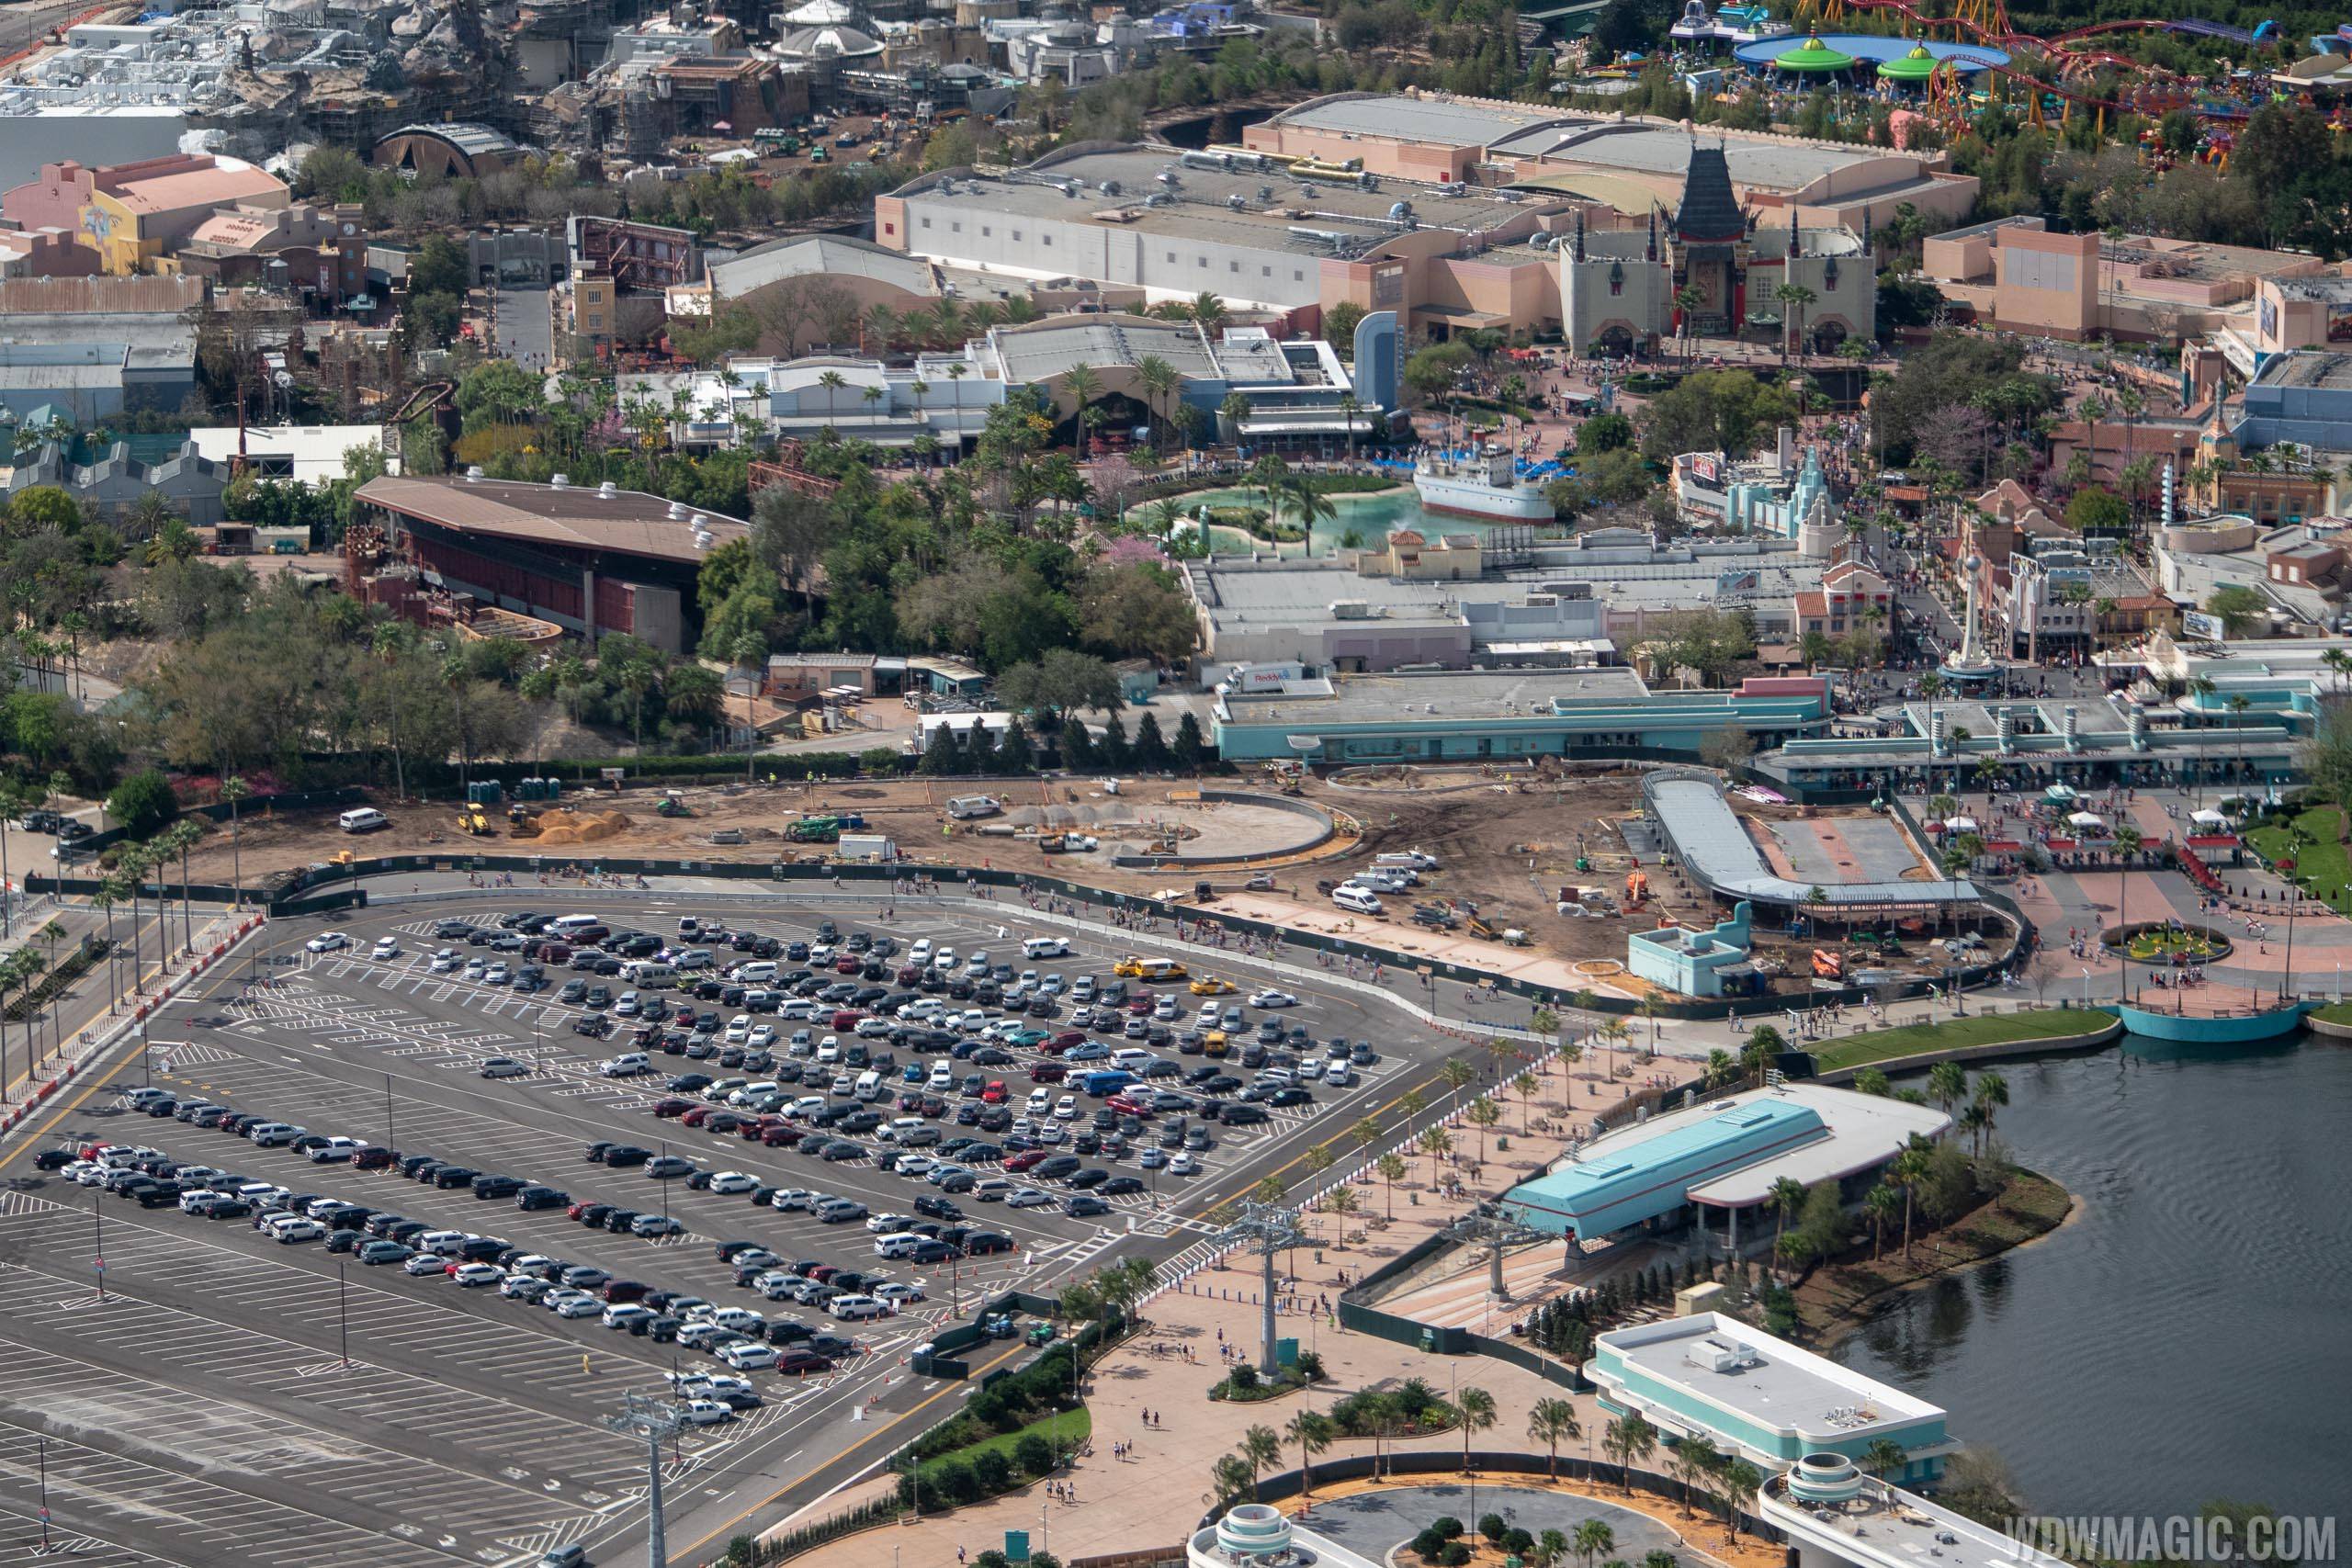 Disney's Hollywood Studios main entrance construction - February 2019